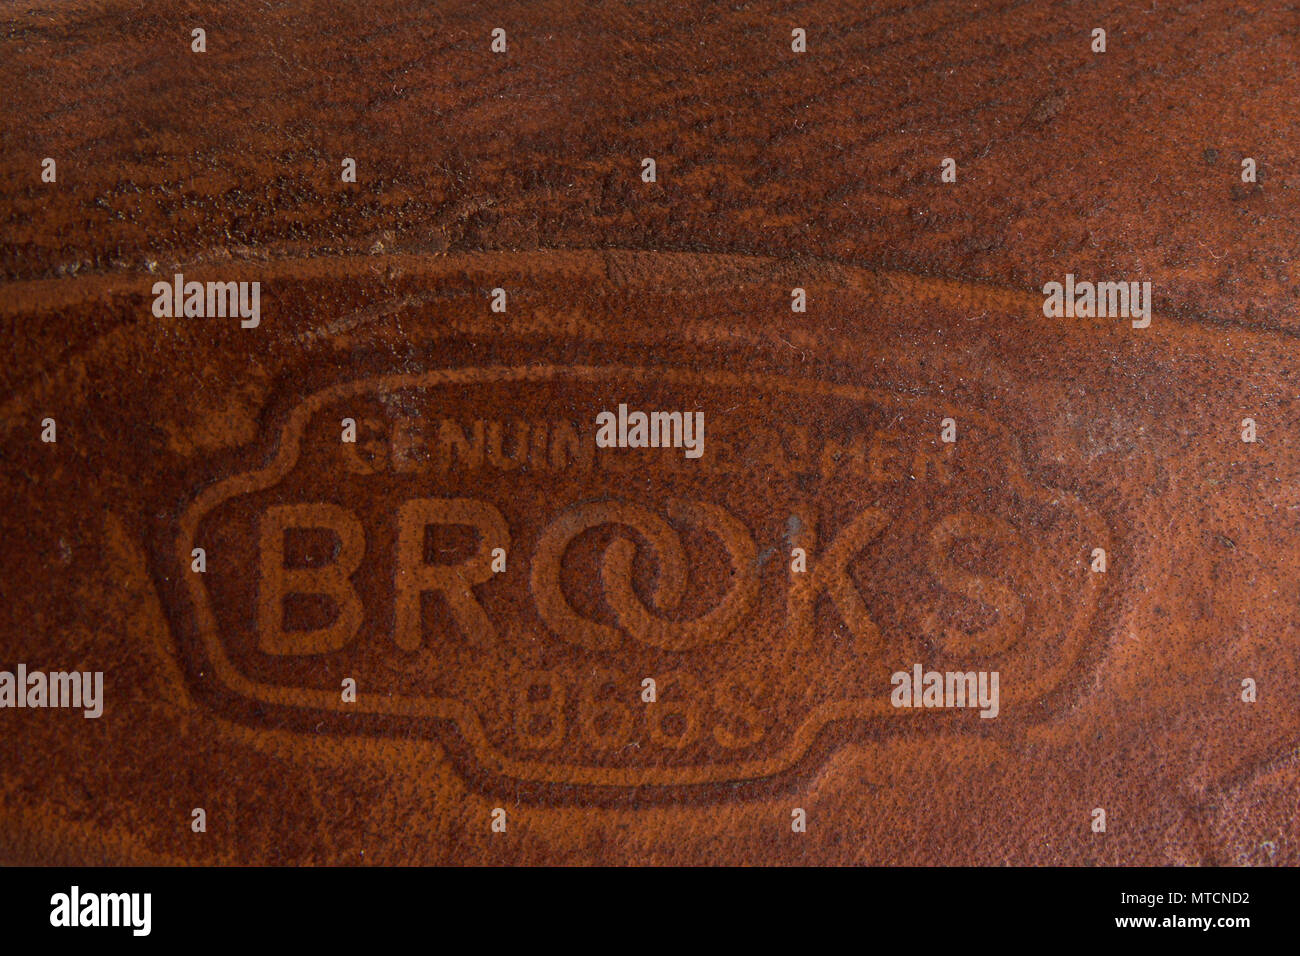 Detail of the vintage Brooks England bicycle saddle Stock Photo